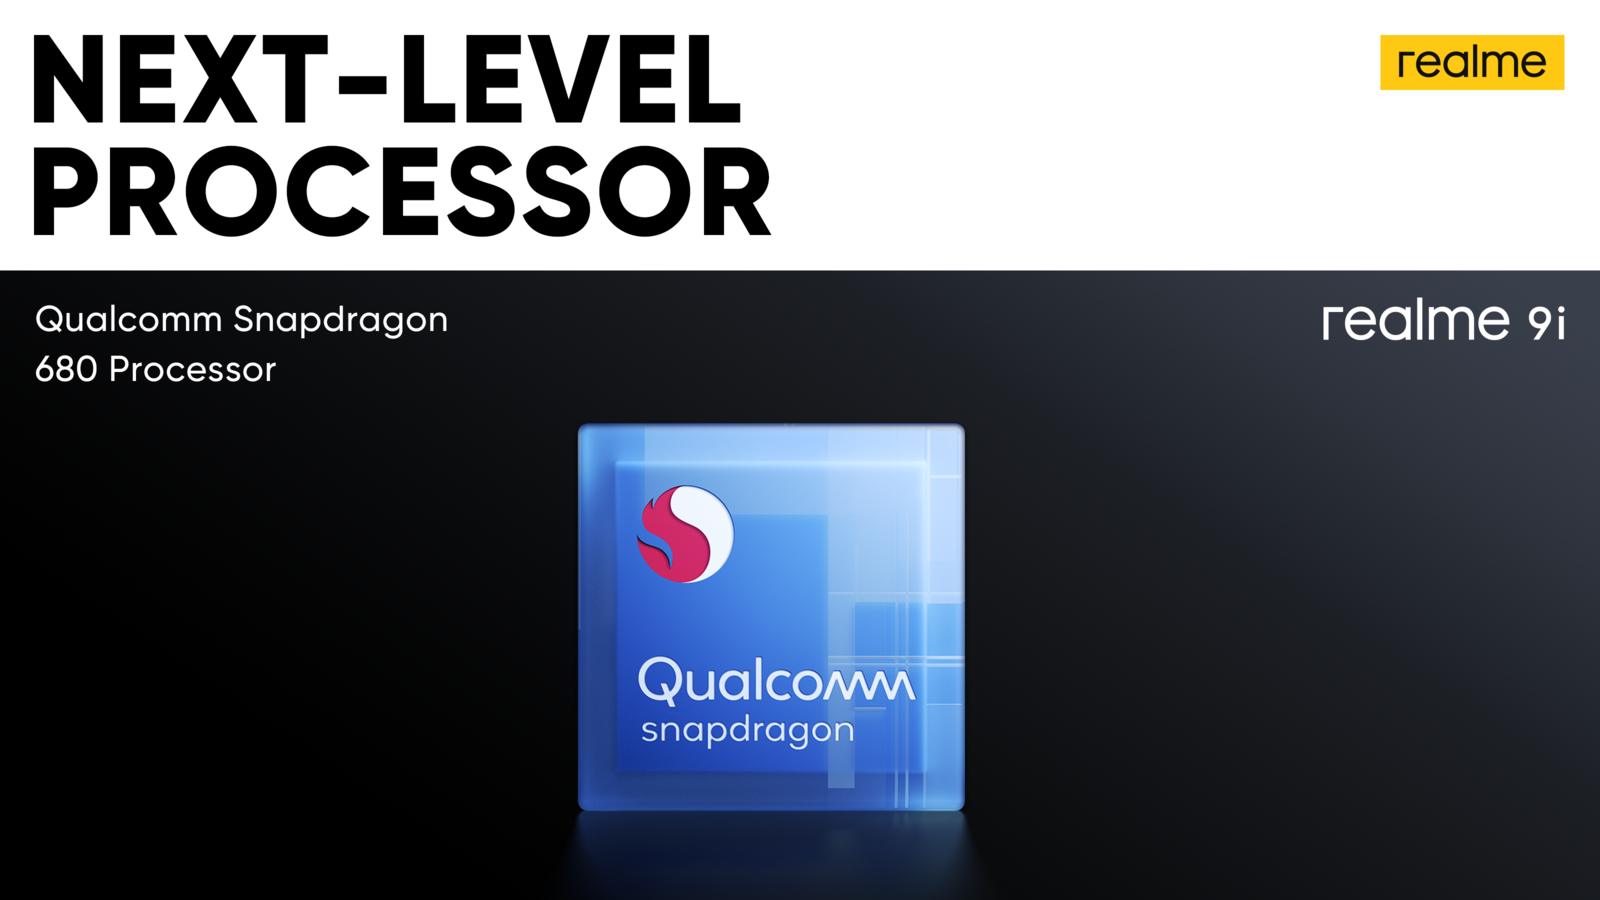 Qualcomm Snapdragon 680 Processor